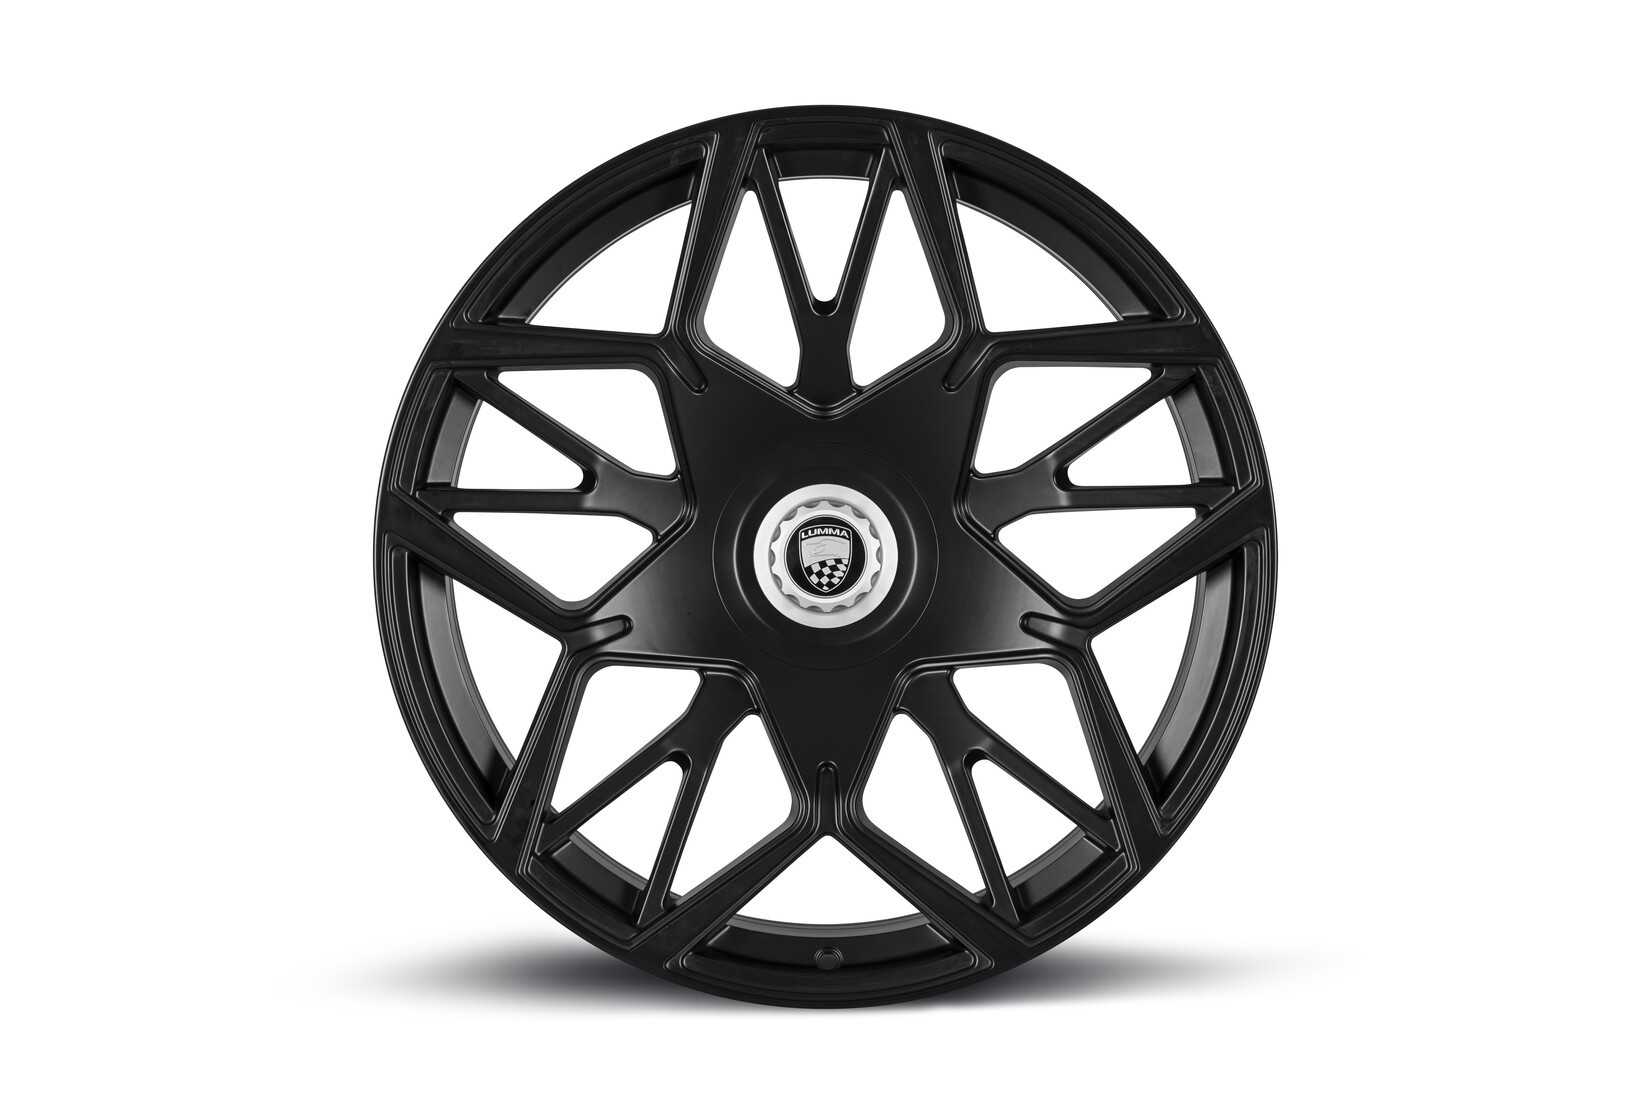 LUMMA CLR LN 1 BLACK 2019 Forged Wheels